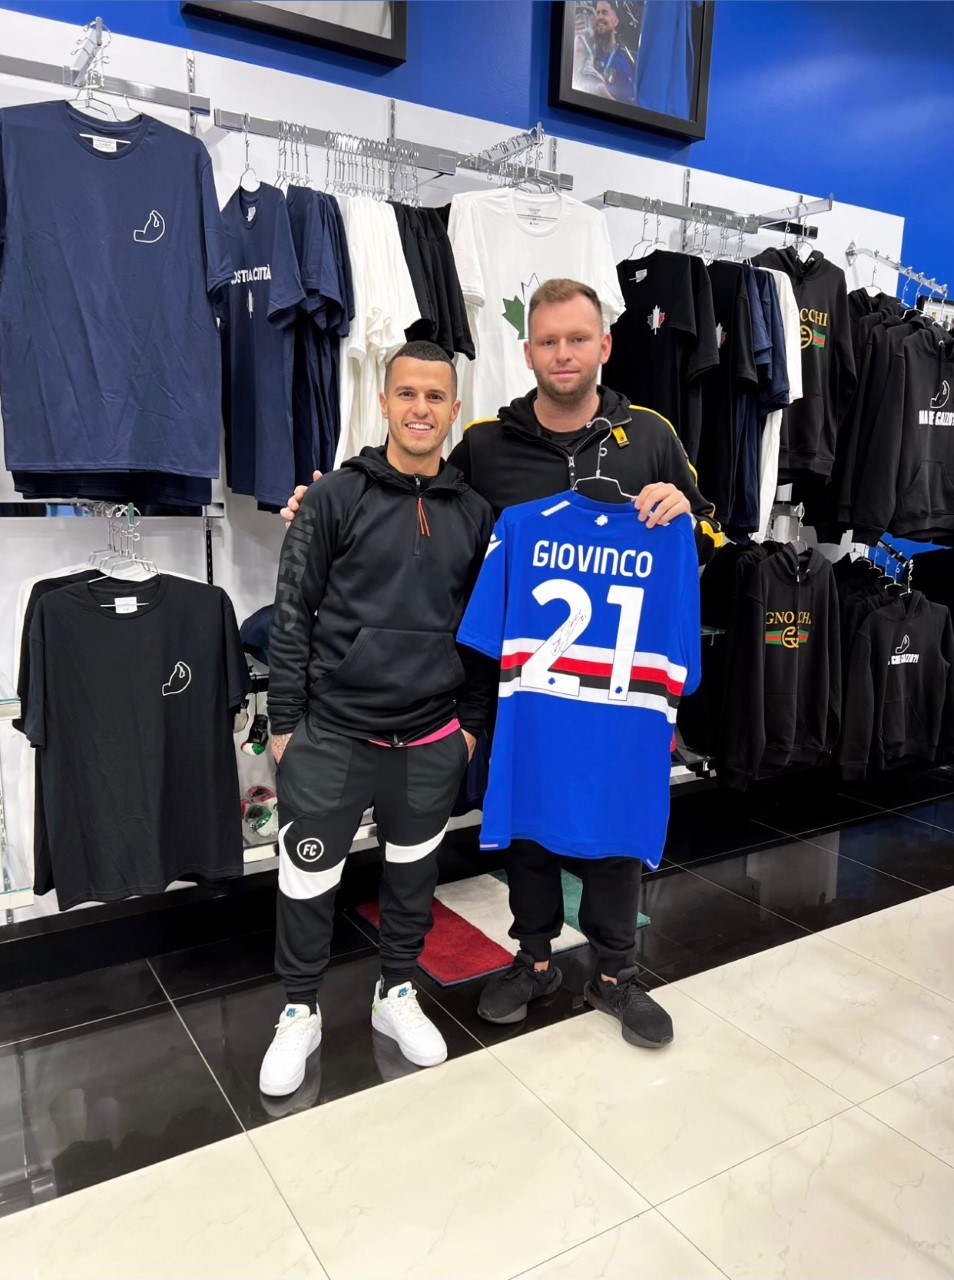 Sebastian Giovinco Signed Charity Sampdoria Jersey